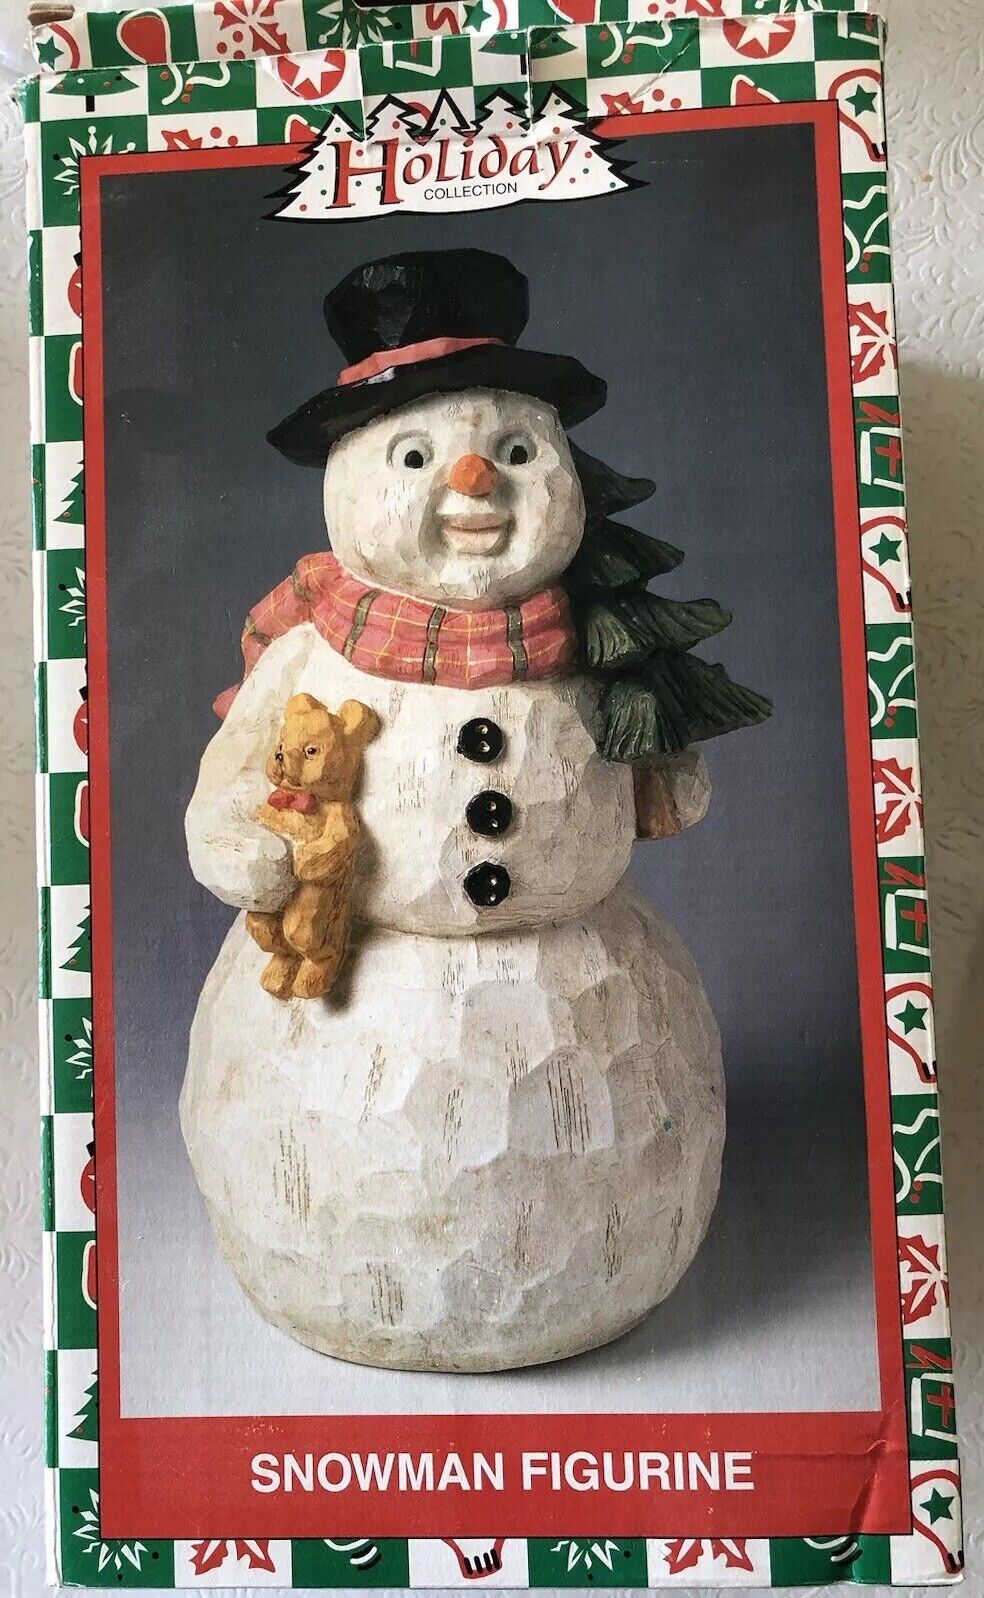 World Bazaar Holiday Collection Snowman